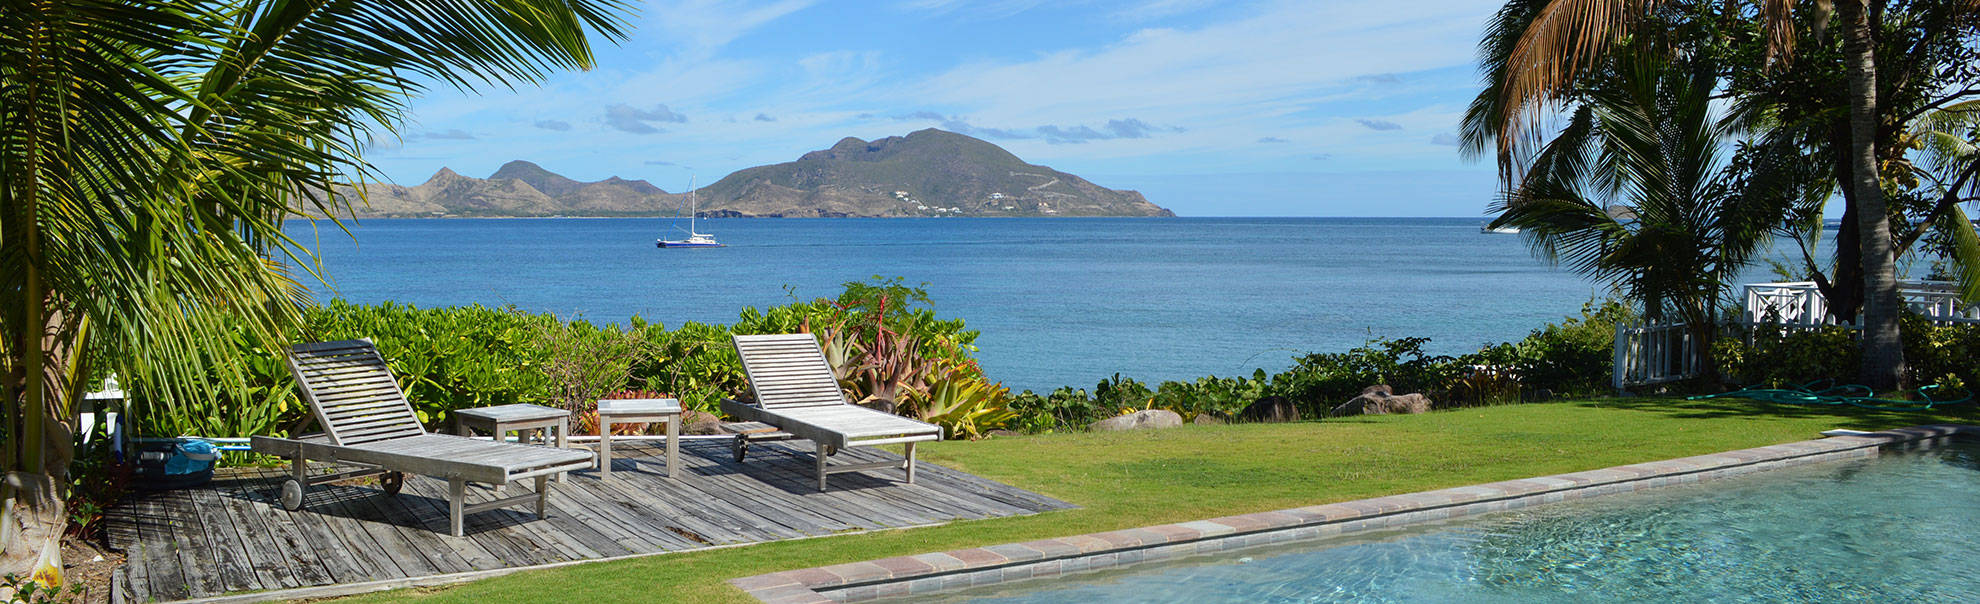 Resortde Piscina En St Kitts Y Nevis. Fondo de pantalla